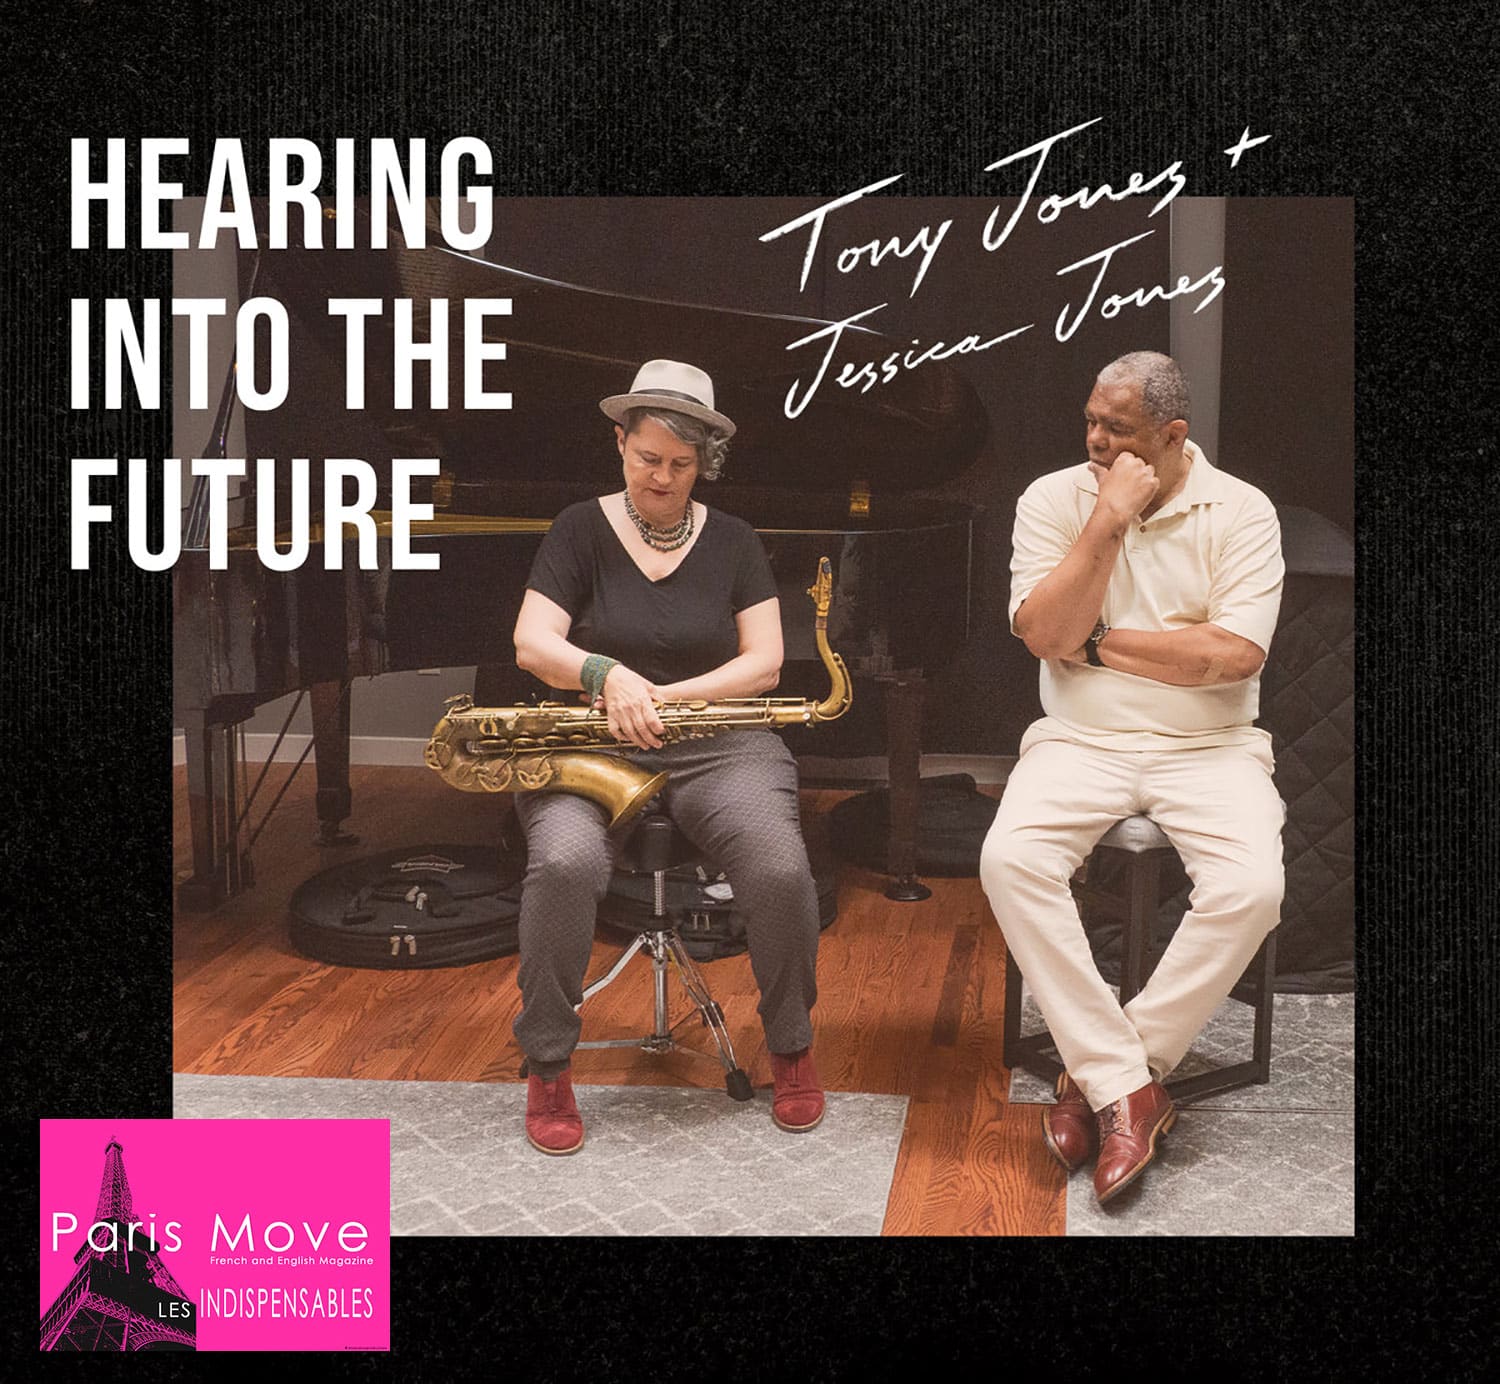 Tony Jones & Jessica Jones - Hearing Into The Future